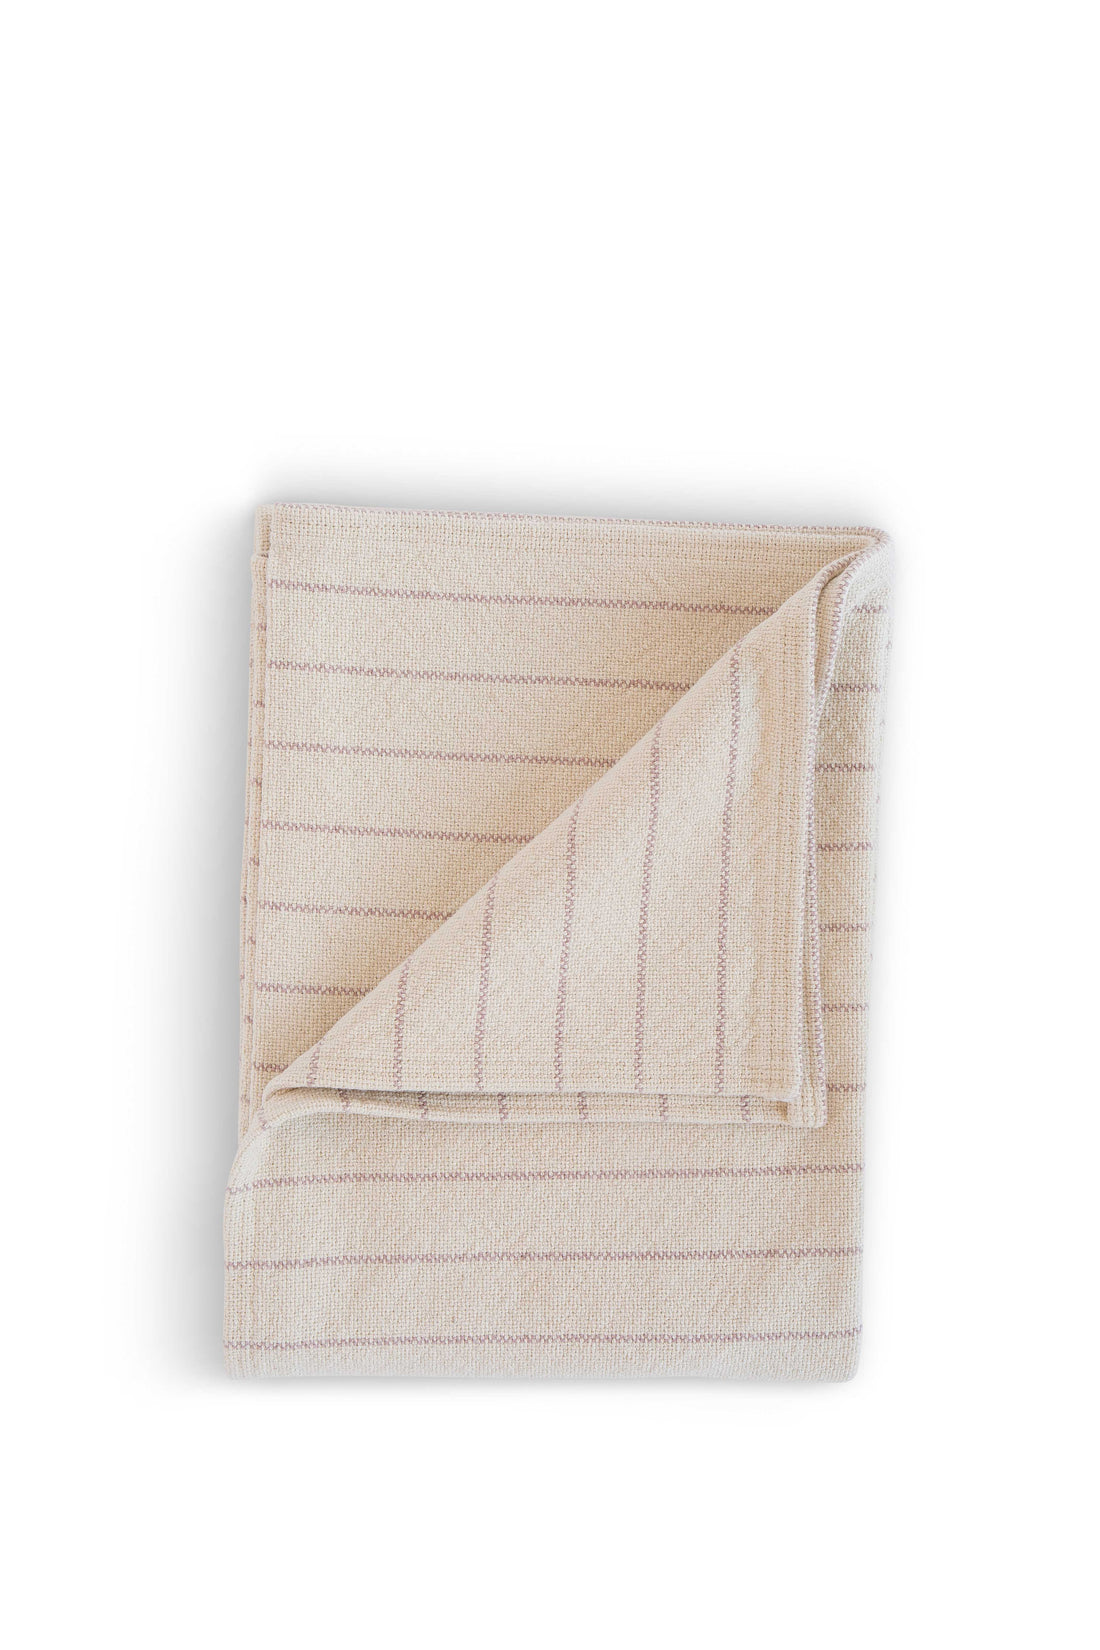 Folded 100% cotton pinstripe throw. Evangeline Linens Portland Maine cotton cream with blush pinstripes.